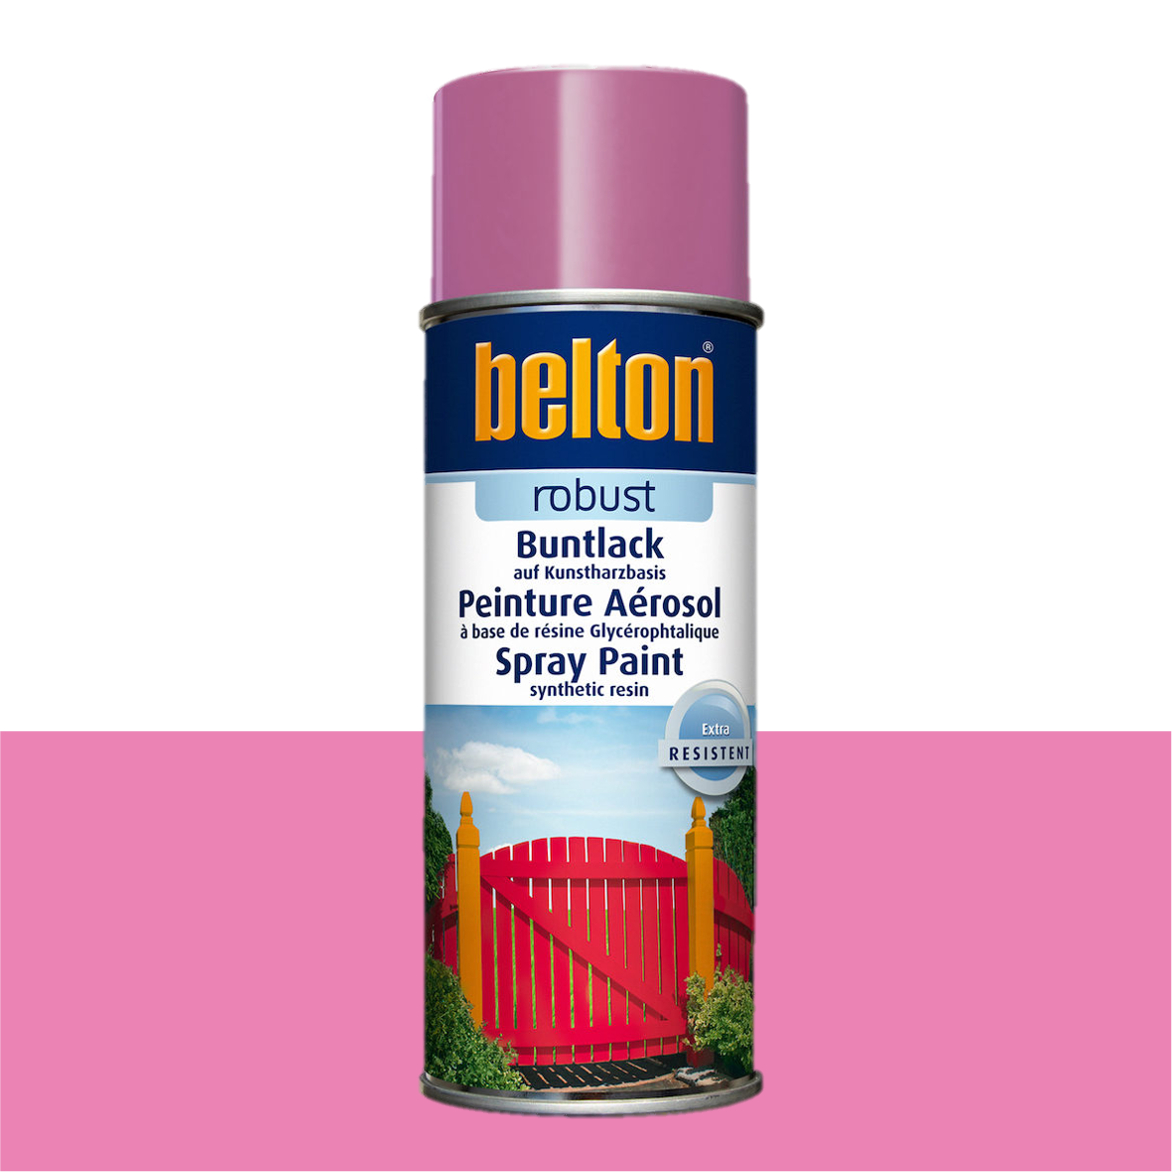 utilgivelig kanal fad Pink spraymaling Belton 400ml. - Køb billig lyserød spray maling